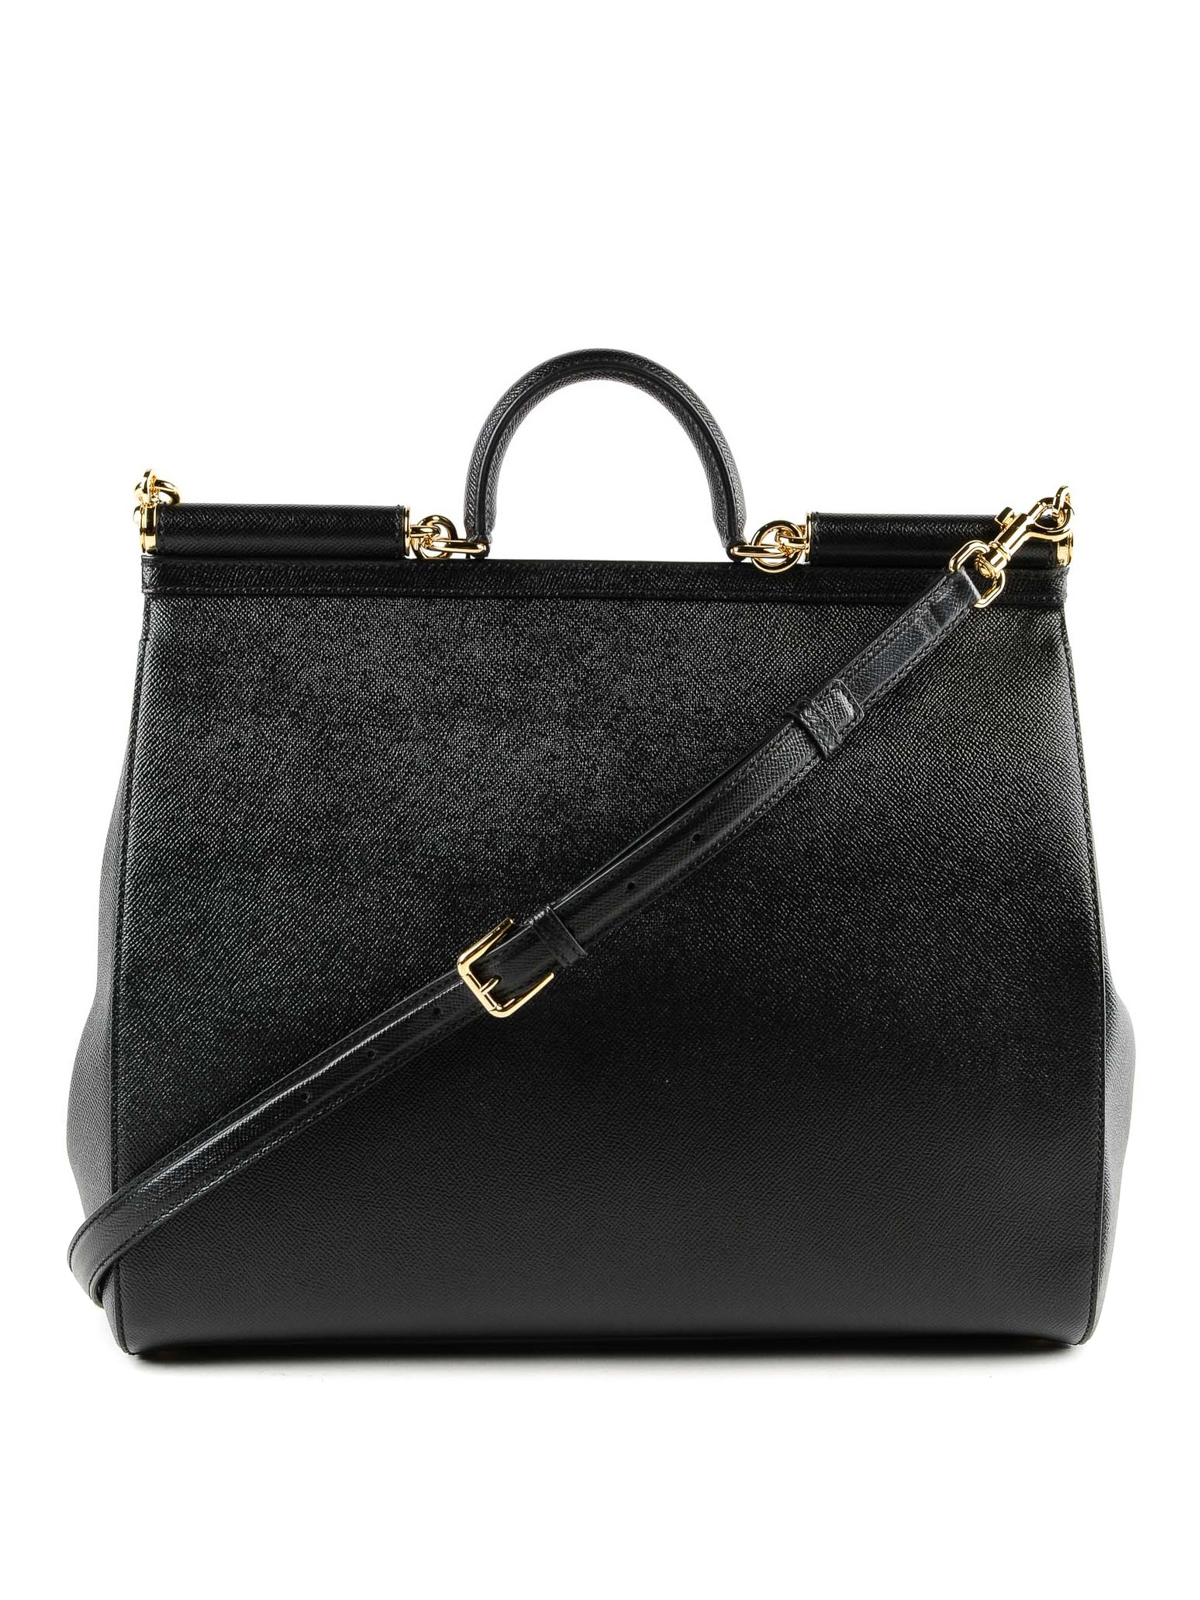 Totes bags Dolce & Gabbana - Black Sicily leather handbag ...